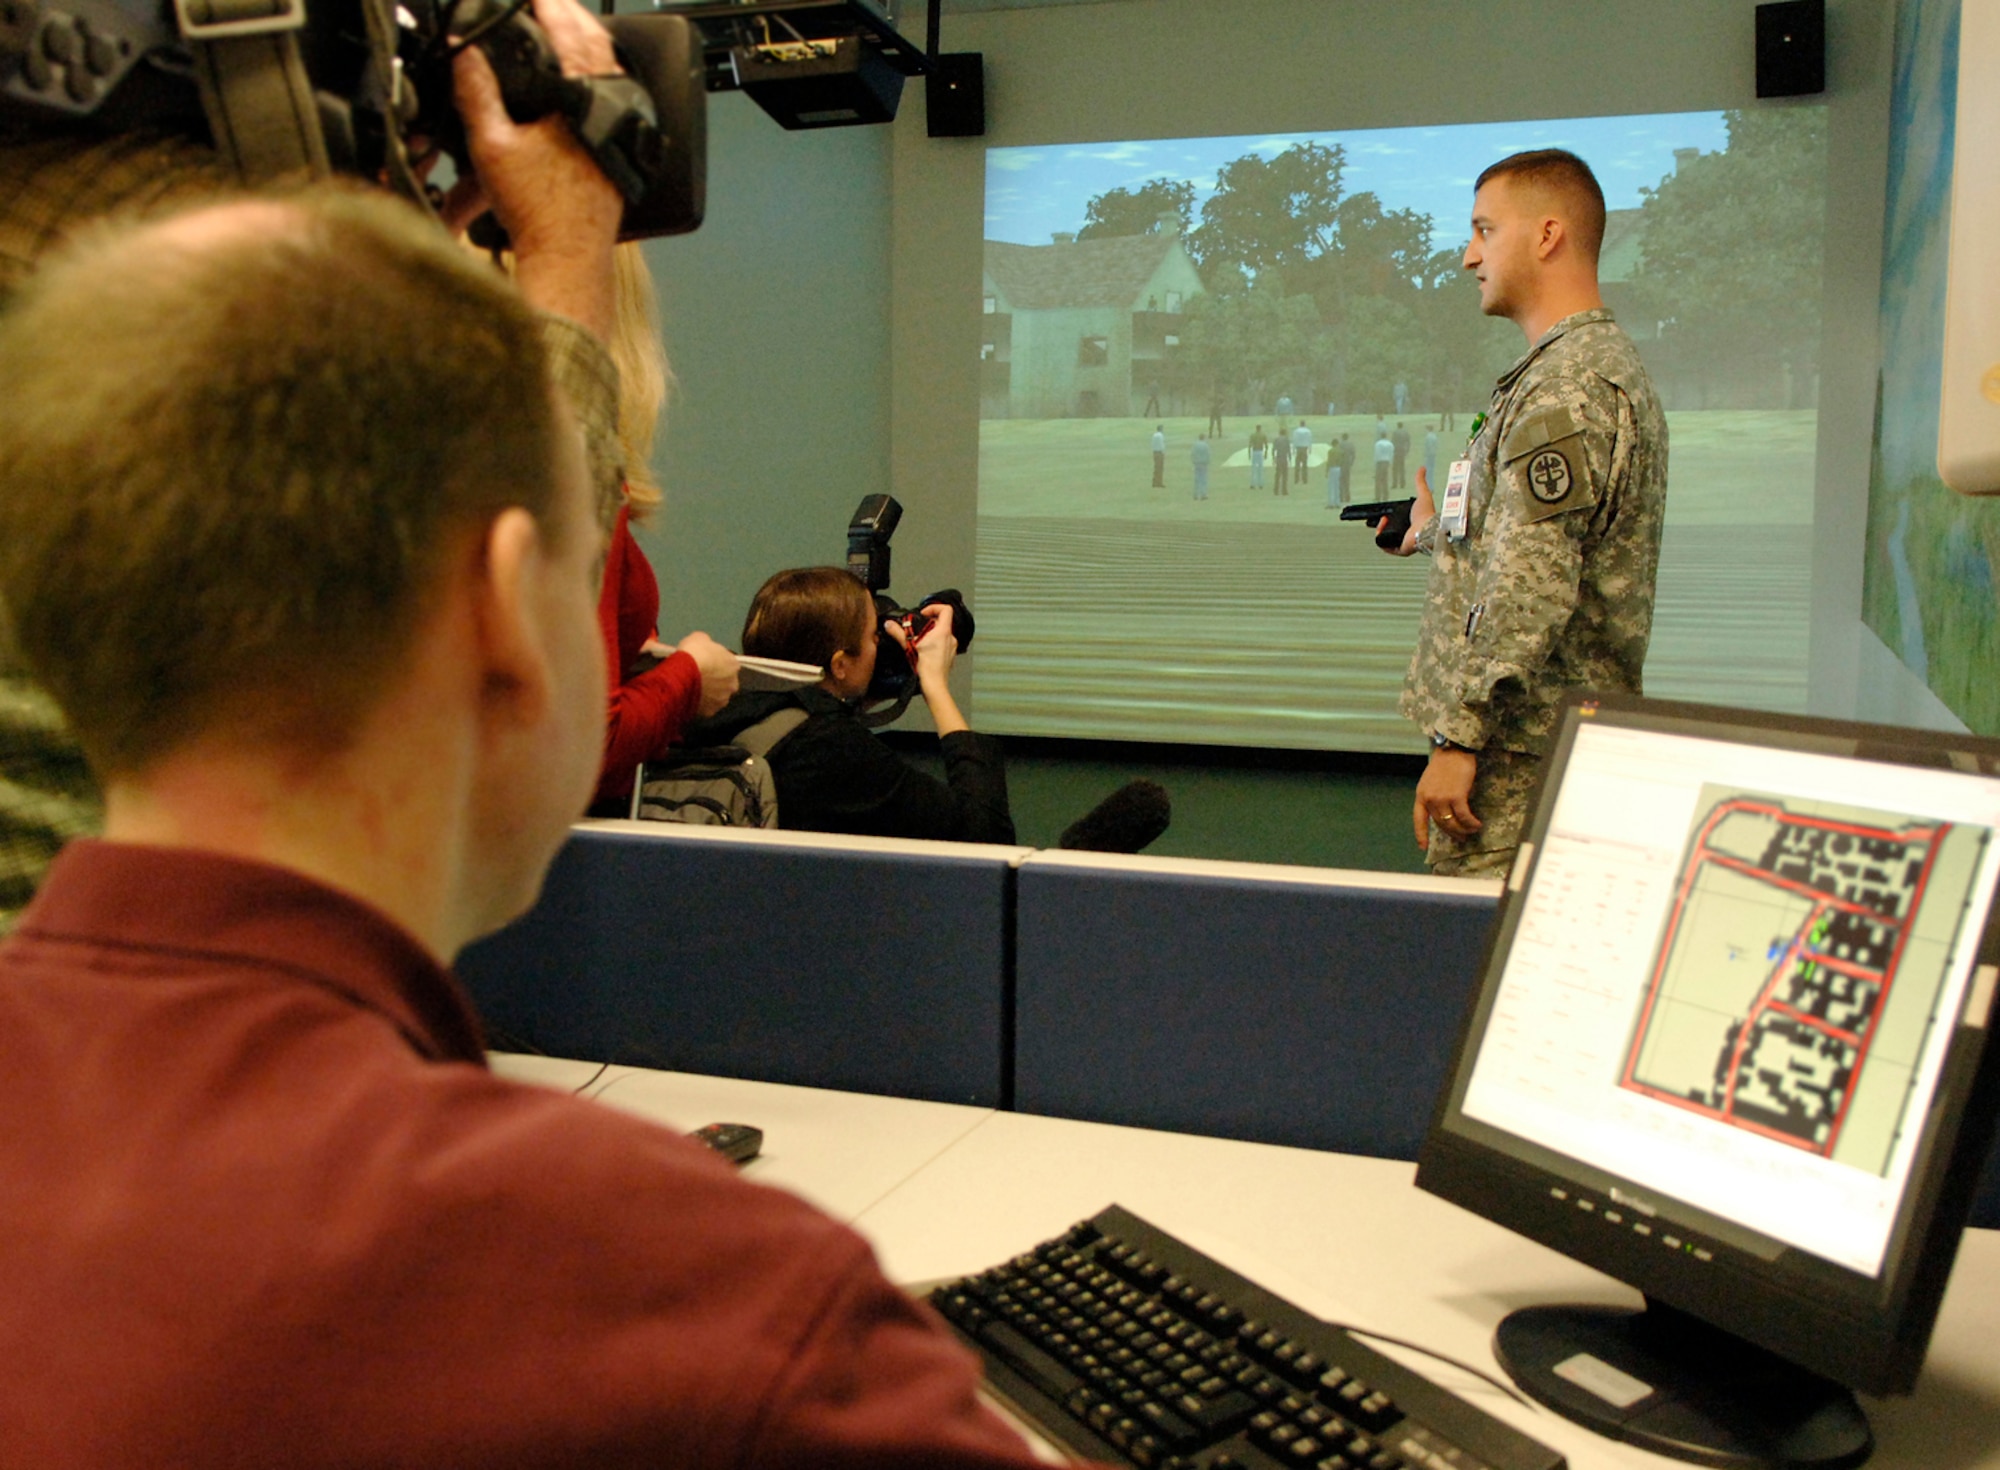 Capt. Scott Kulla demonstrates firing a replica of the 9 mm pistol using the firearms training simulator, a virtual firing range at the Center for the Intrepid in San Antonio Jan. 29. (U.S. Air Force photo/Daren Reehl)